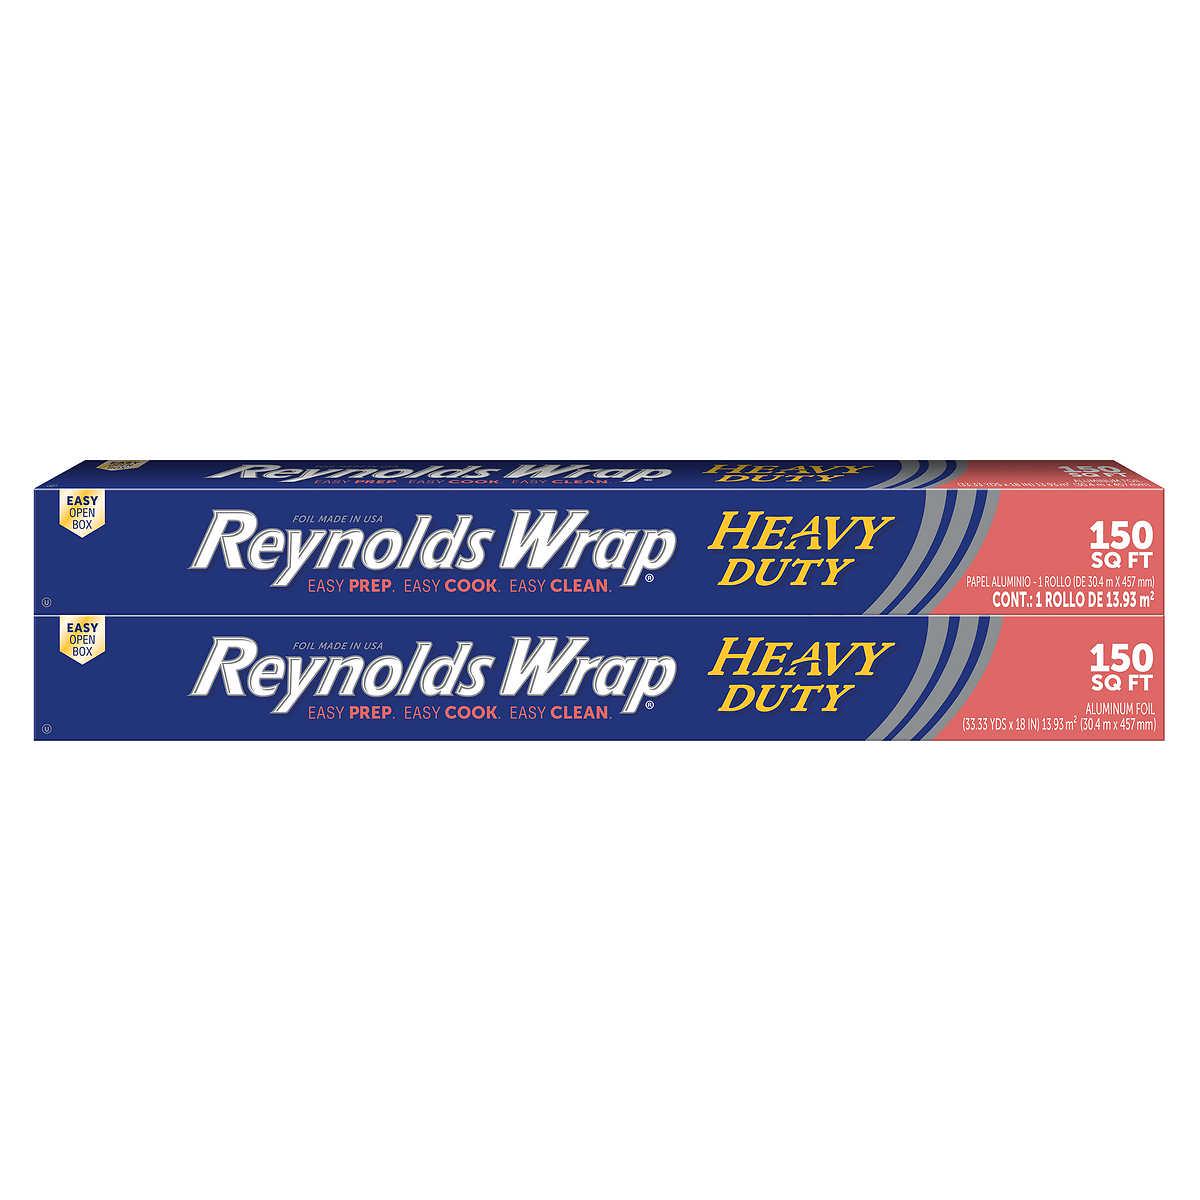 Reynolds Wrap Everyday Strength Aluminum Foil, 25 Square Feet